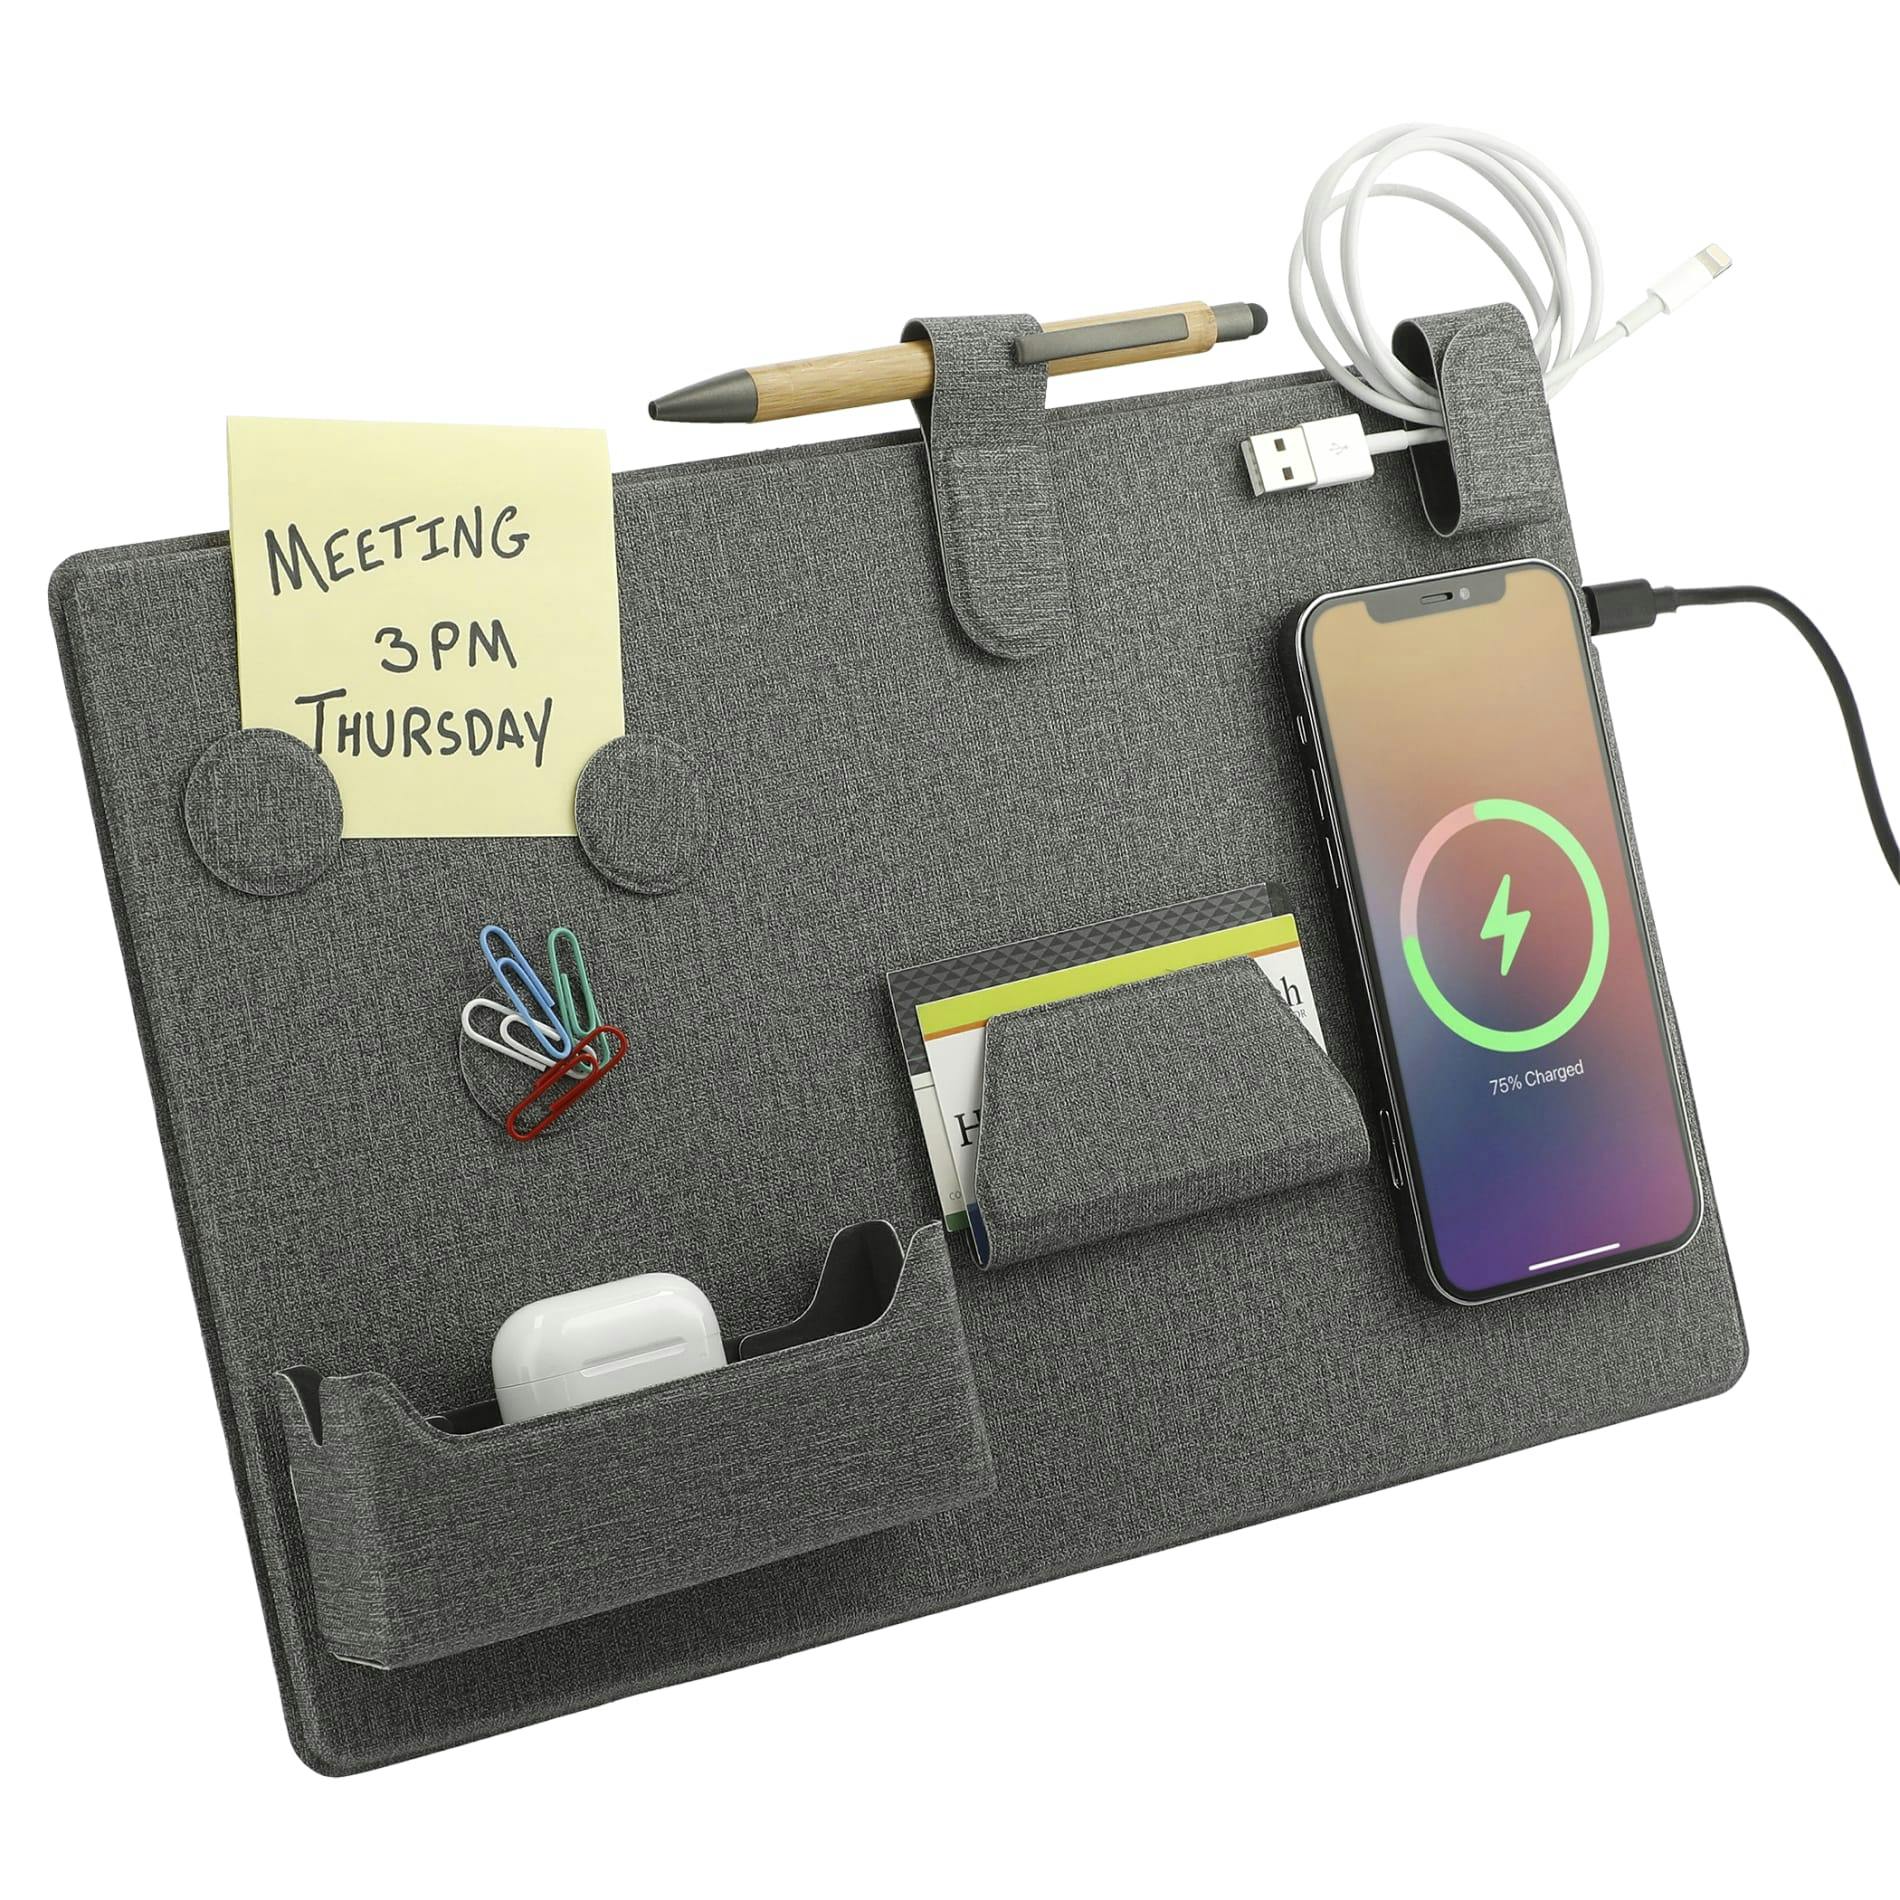 MagClick™ Fast Wireless Charging Desk Organizer - additional Image 4